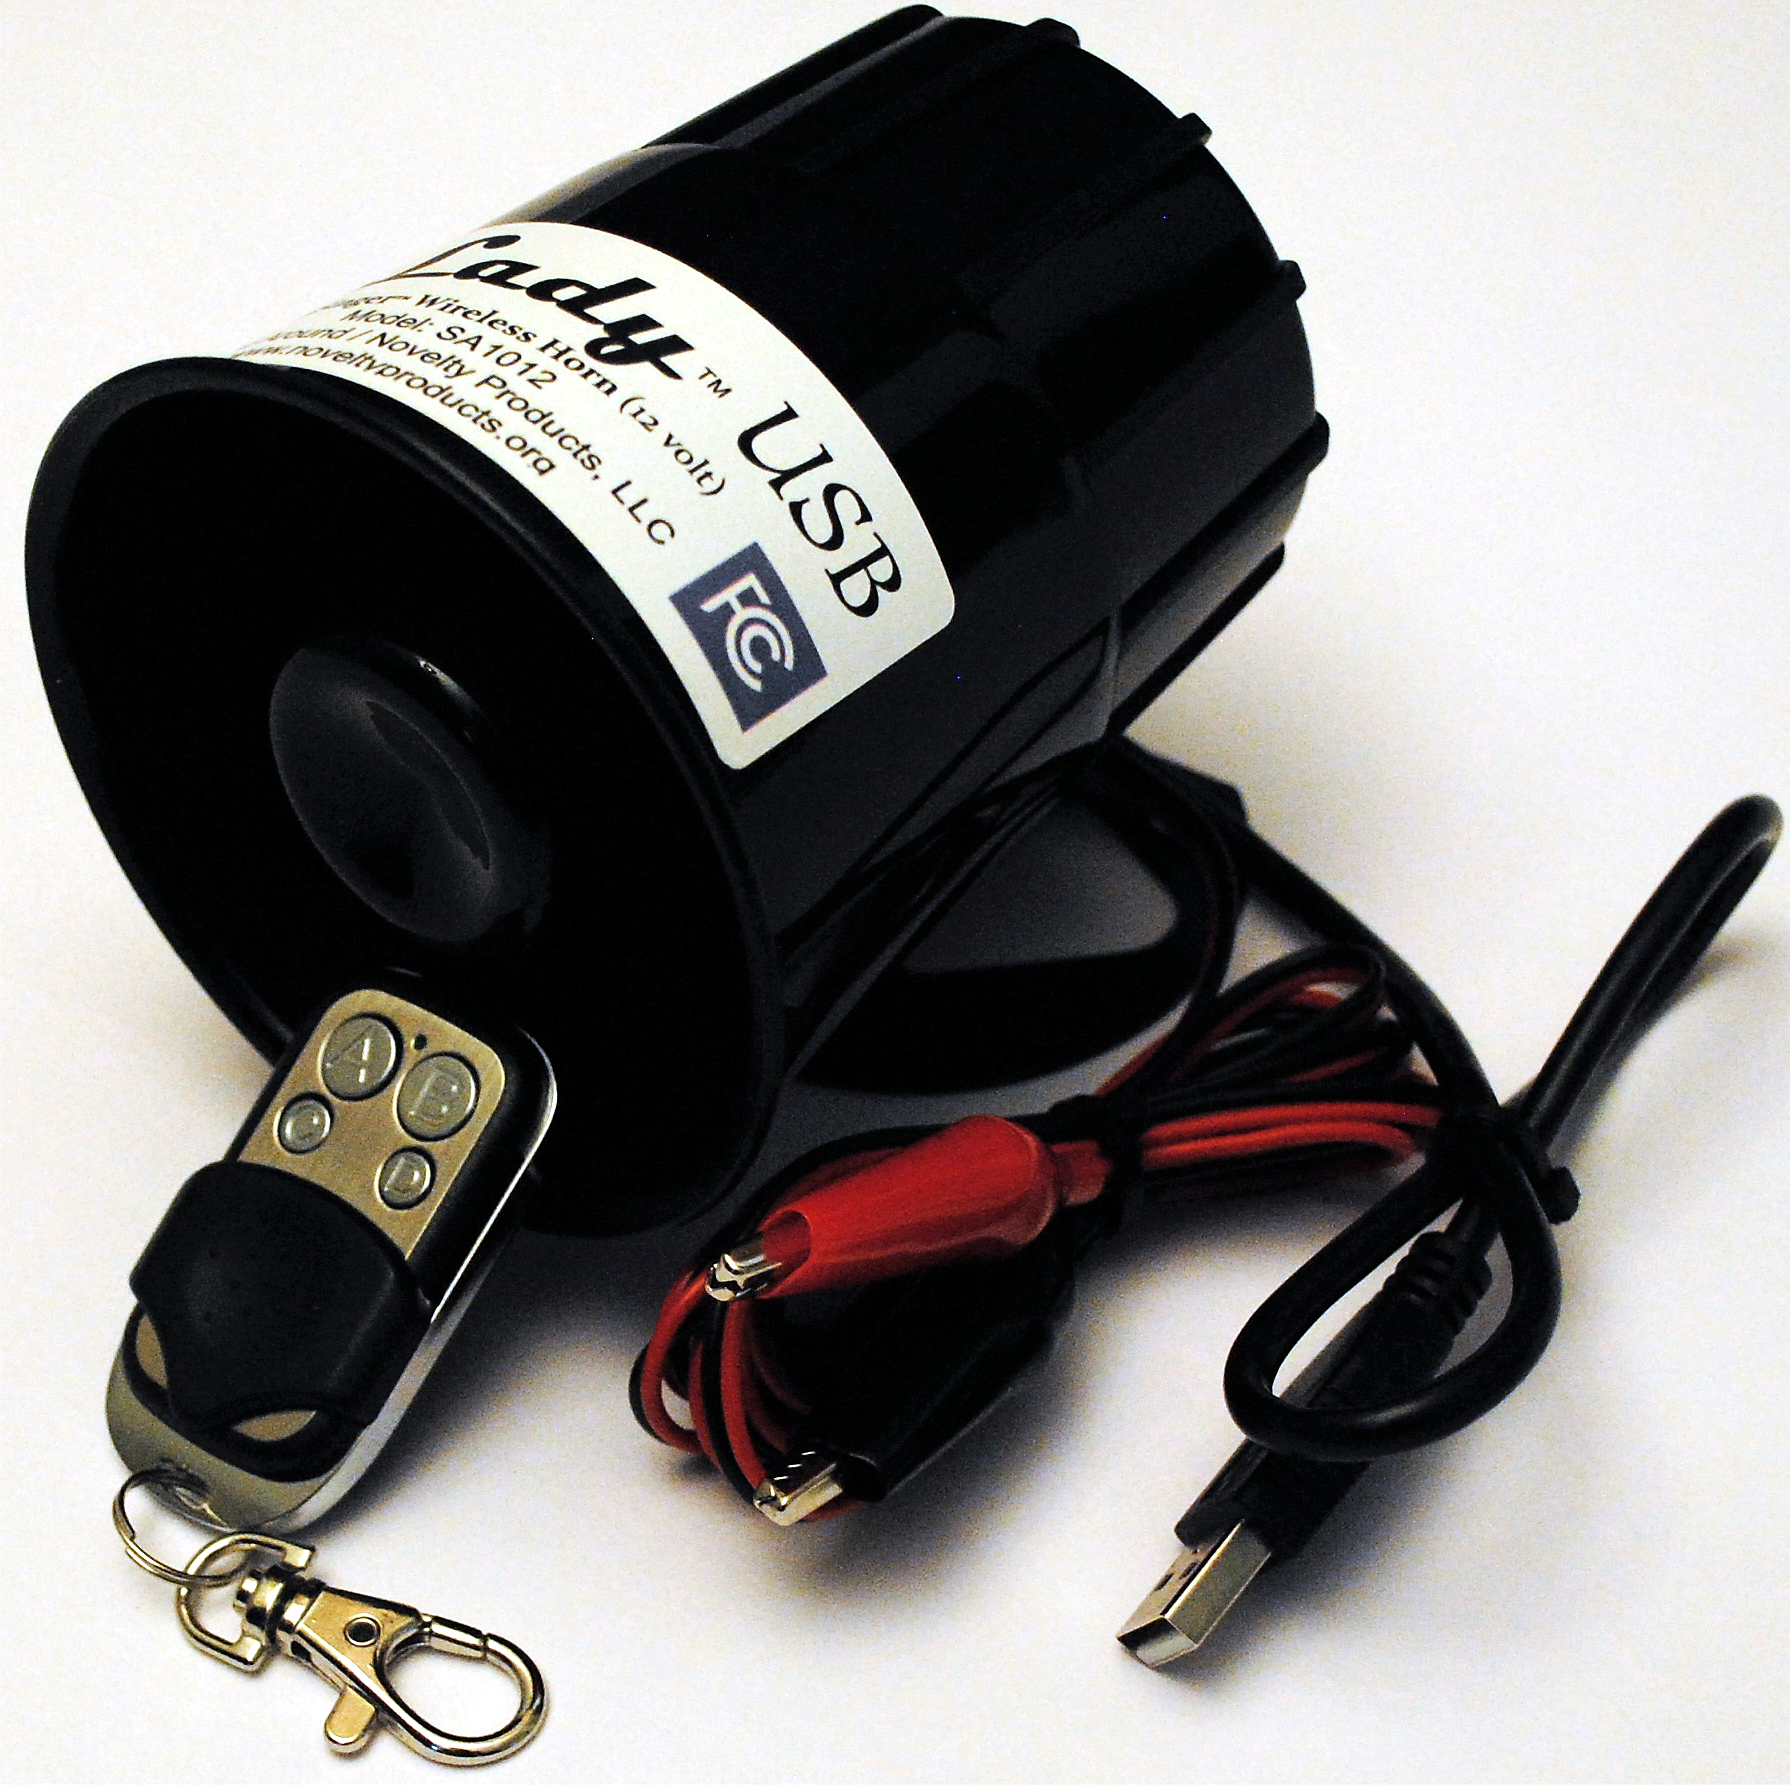 Utah Utes USB Car Horn with Wireless KeyFOB Remote